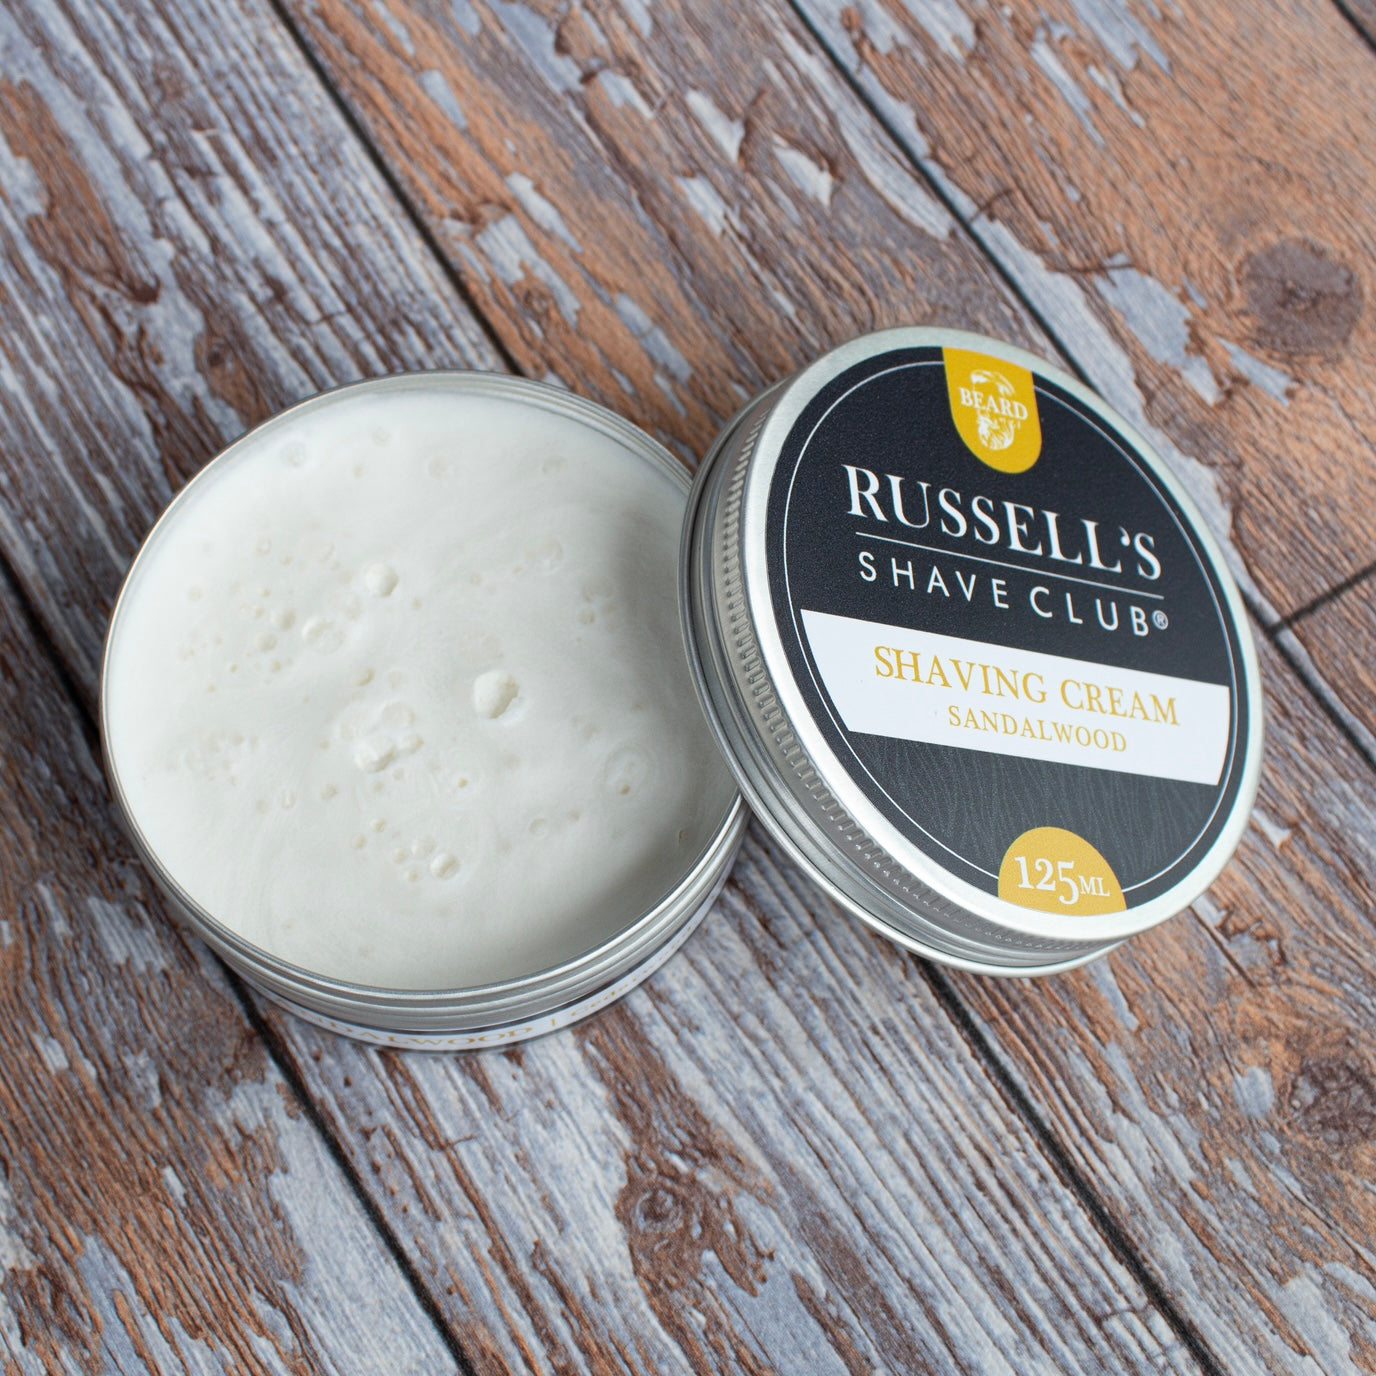 Russell's Shave Club Sandalwood Shaving Cream - 125ml